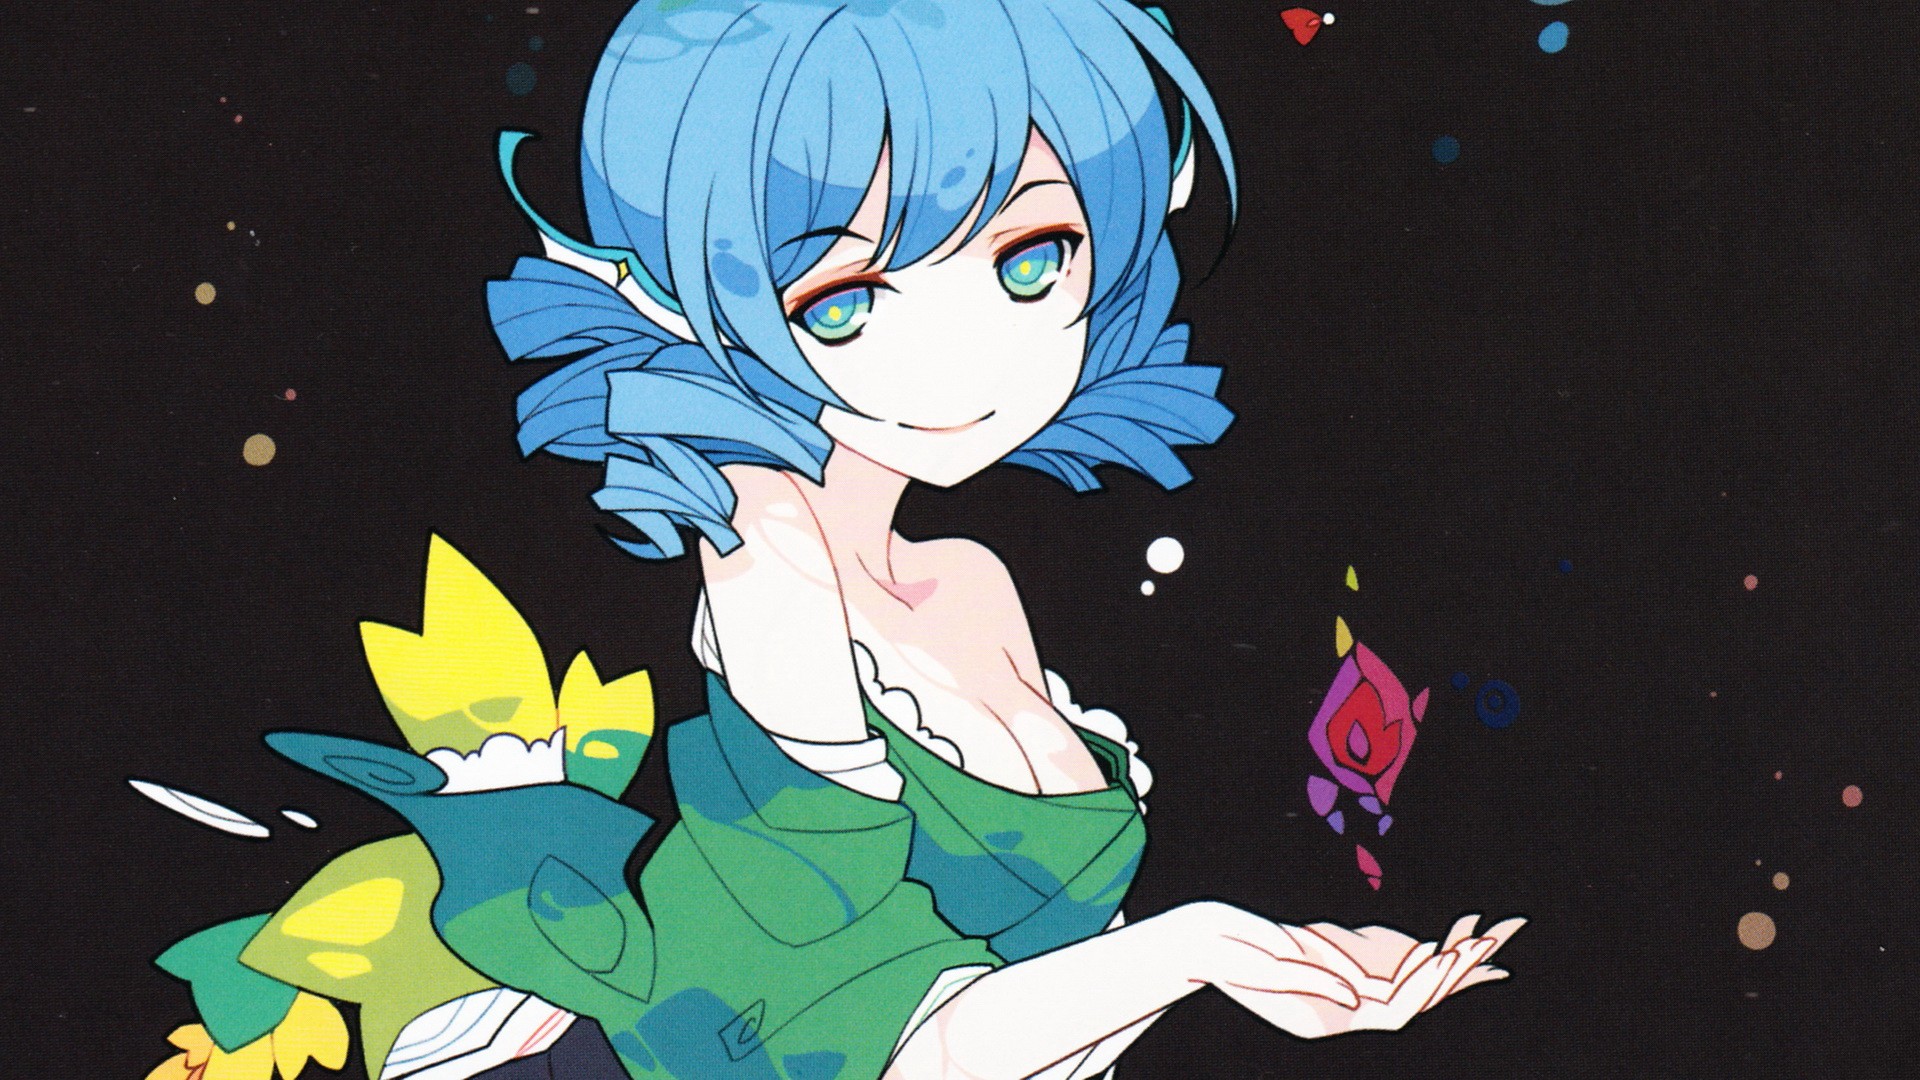 Touhou Wakasagihime Anime Girls Video Games Blue Hair Short Hair Bangs Curly Hair Blue Eyes Bare Sho Wallpaper Resolution 1920x1080 Id 40016 Wallha Com